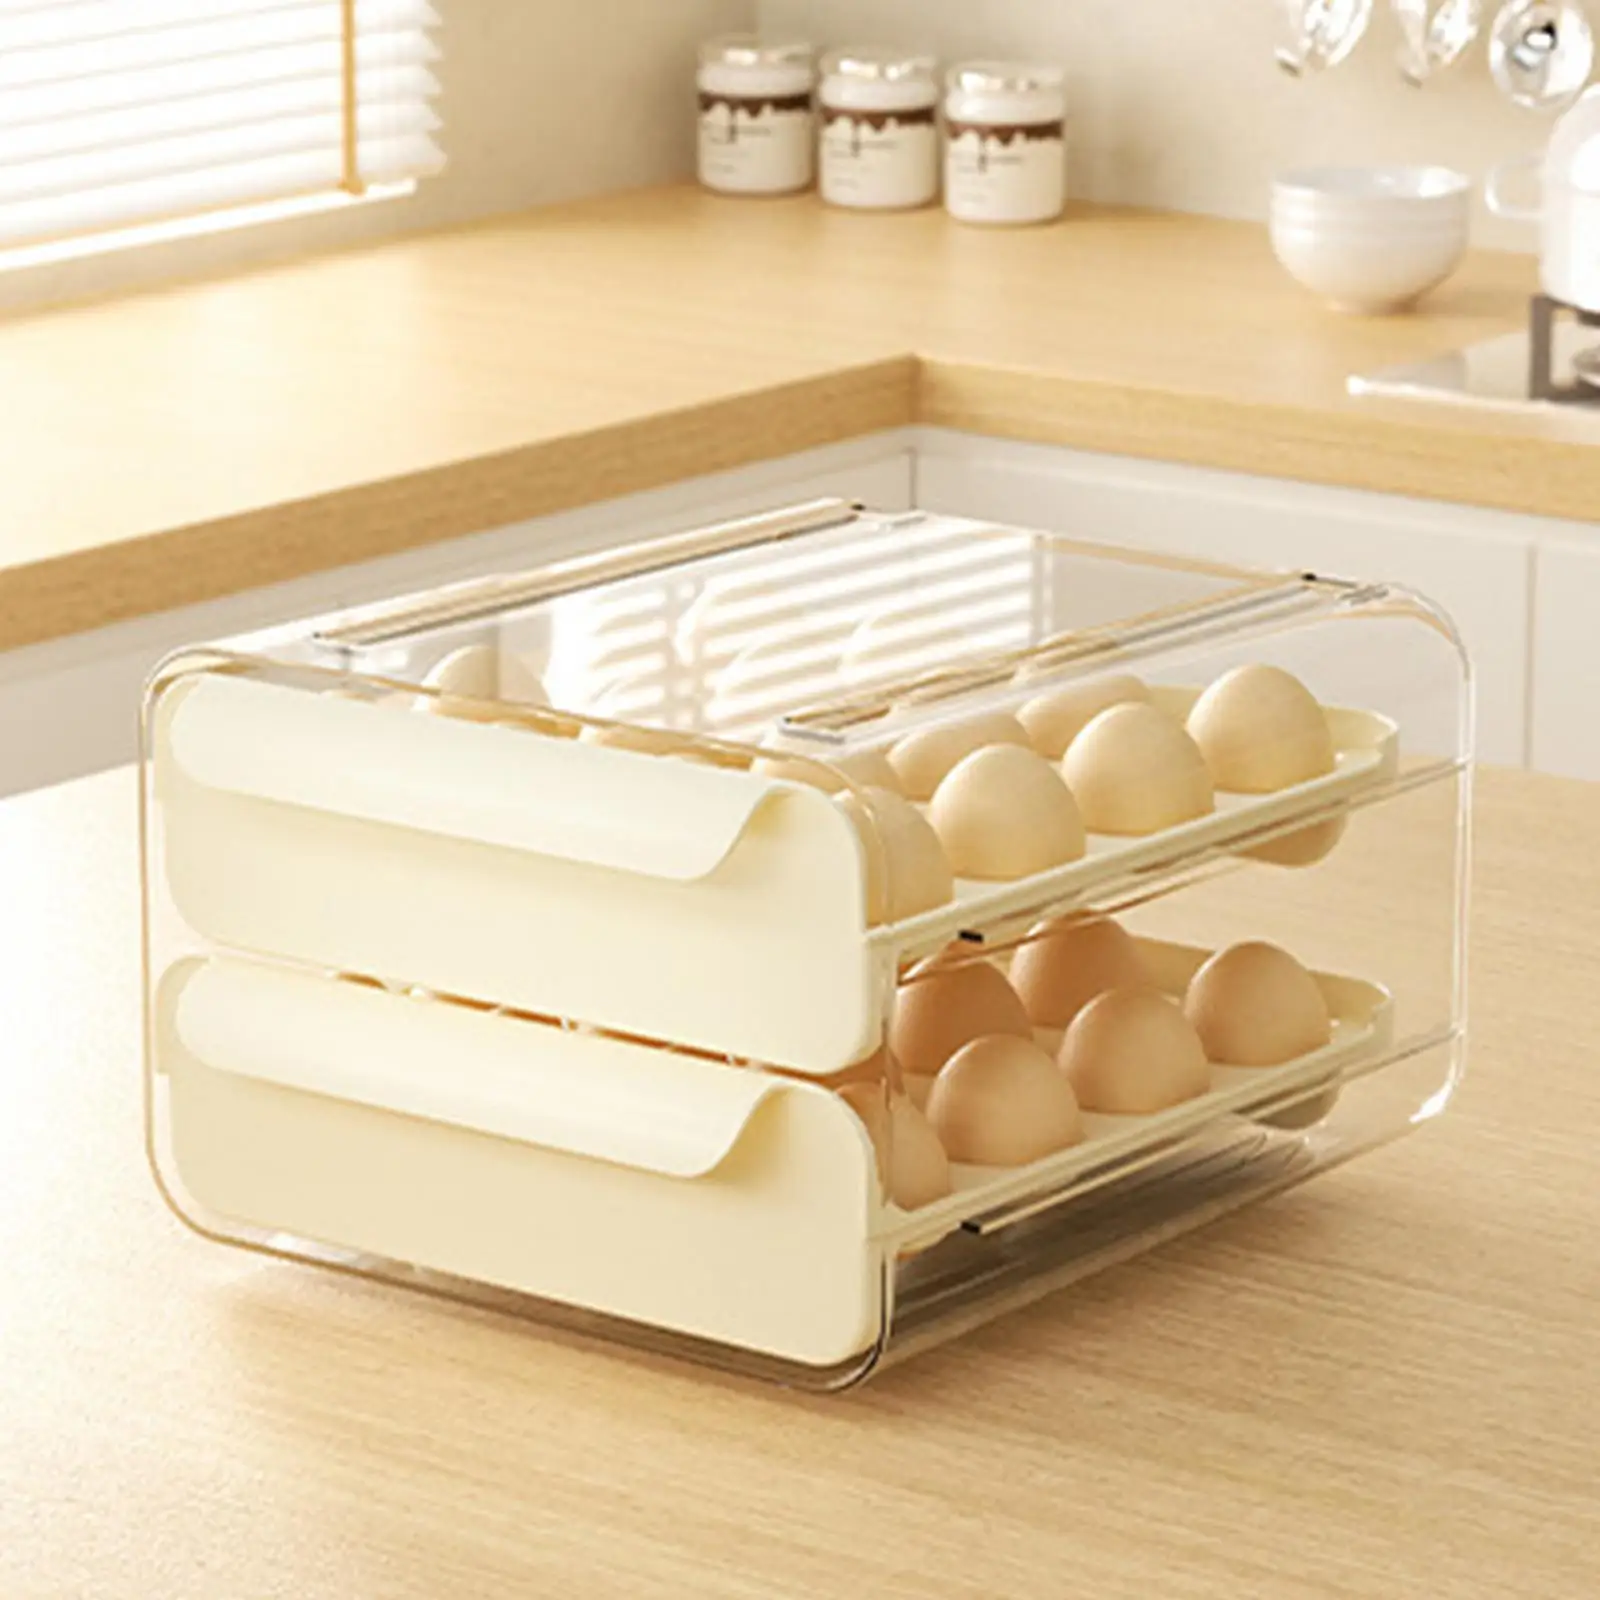 Egg Holder Tray Holds 32 Eggs Fridge Egg Drawer Organizer Bins Eggs Storage Tray for Cupboard Countertop Kitchen Cabinet